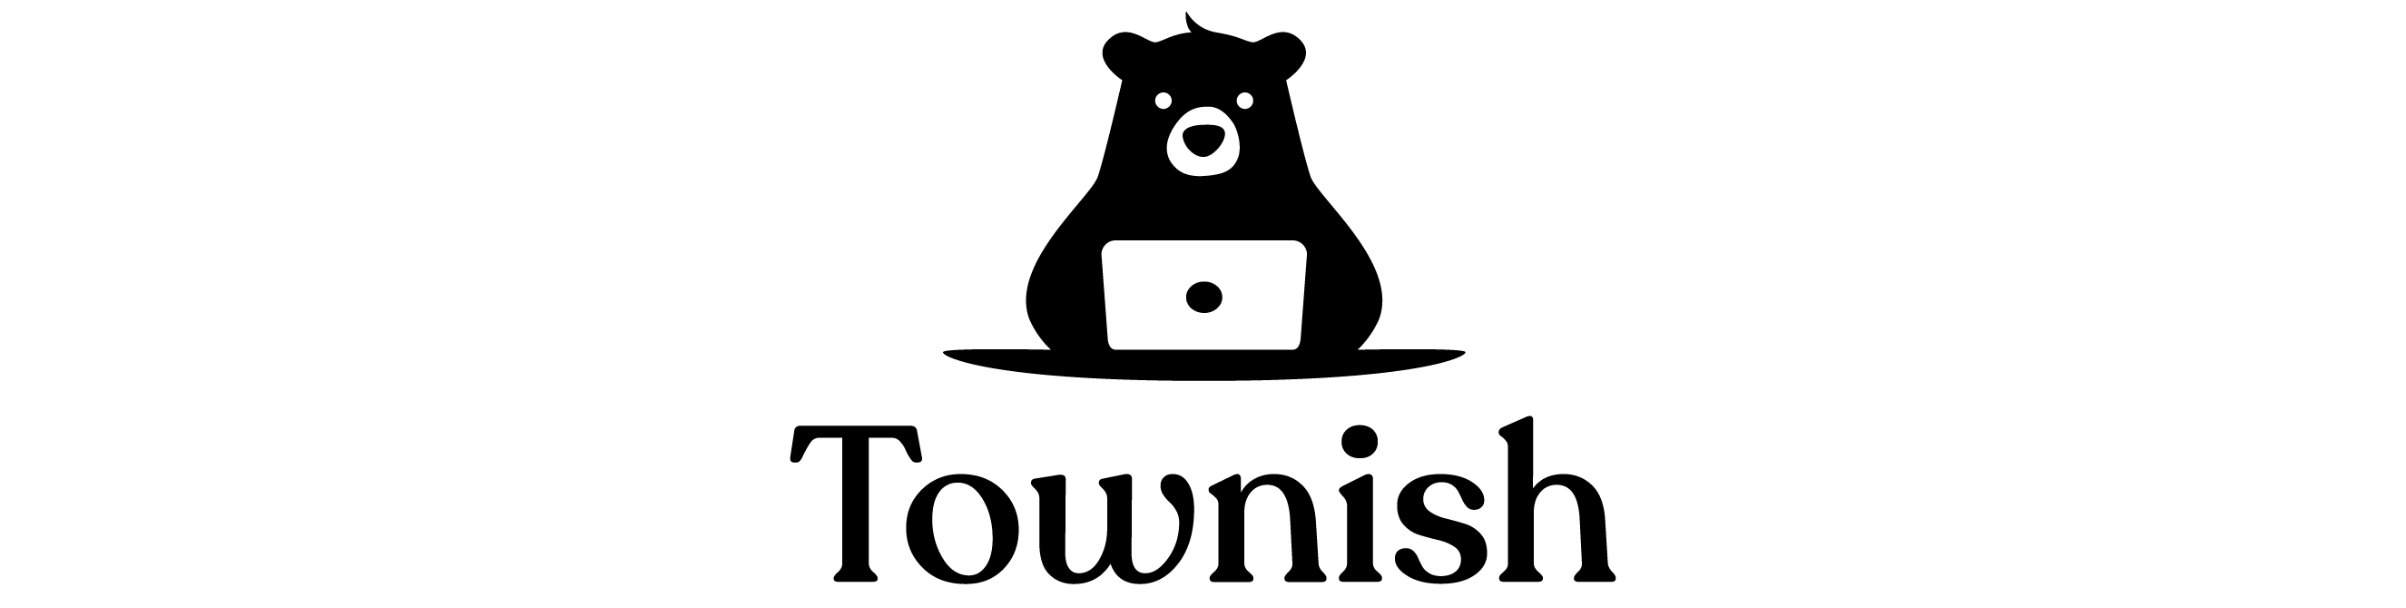 Townish logo